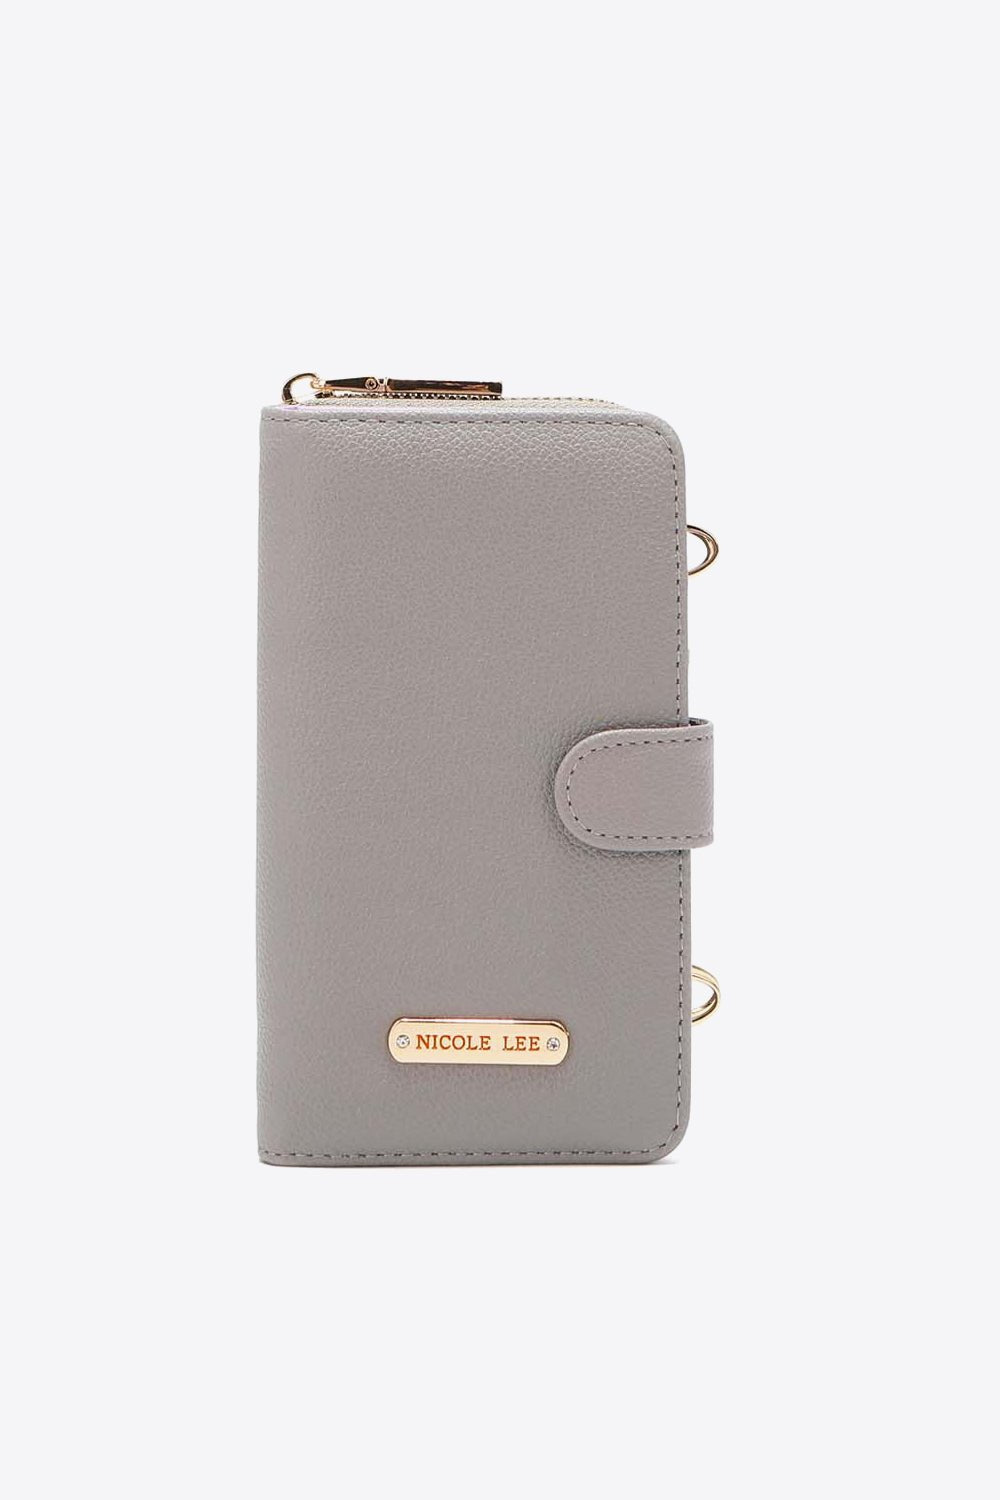 Two-Piece Crossbody Phone Case Wallet - Wallet Tangerine Goddess Gray Dawn / One Size